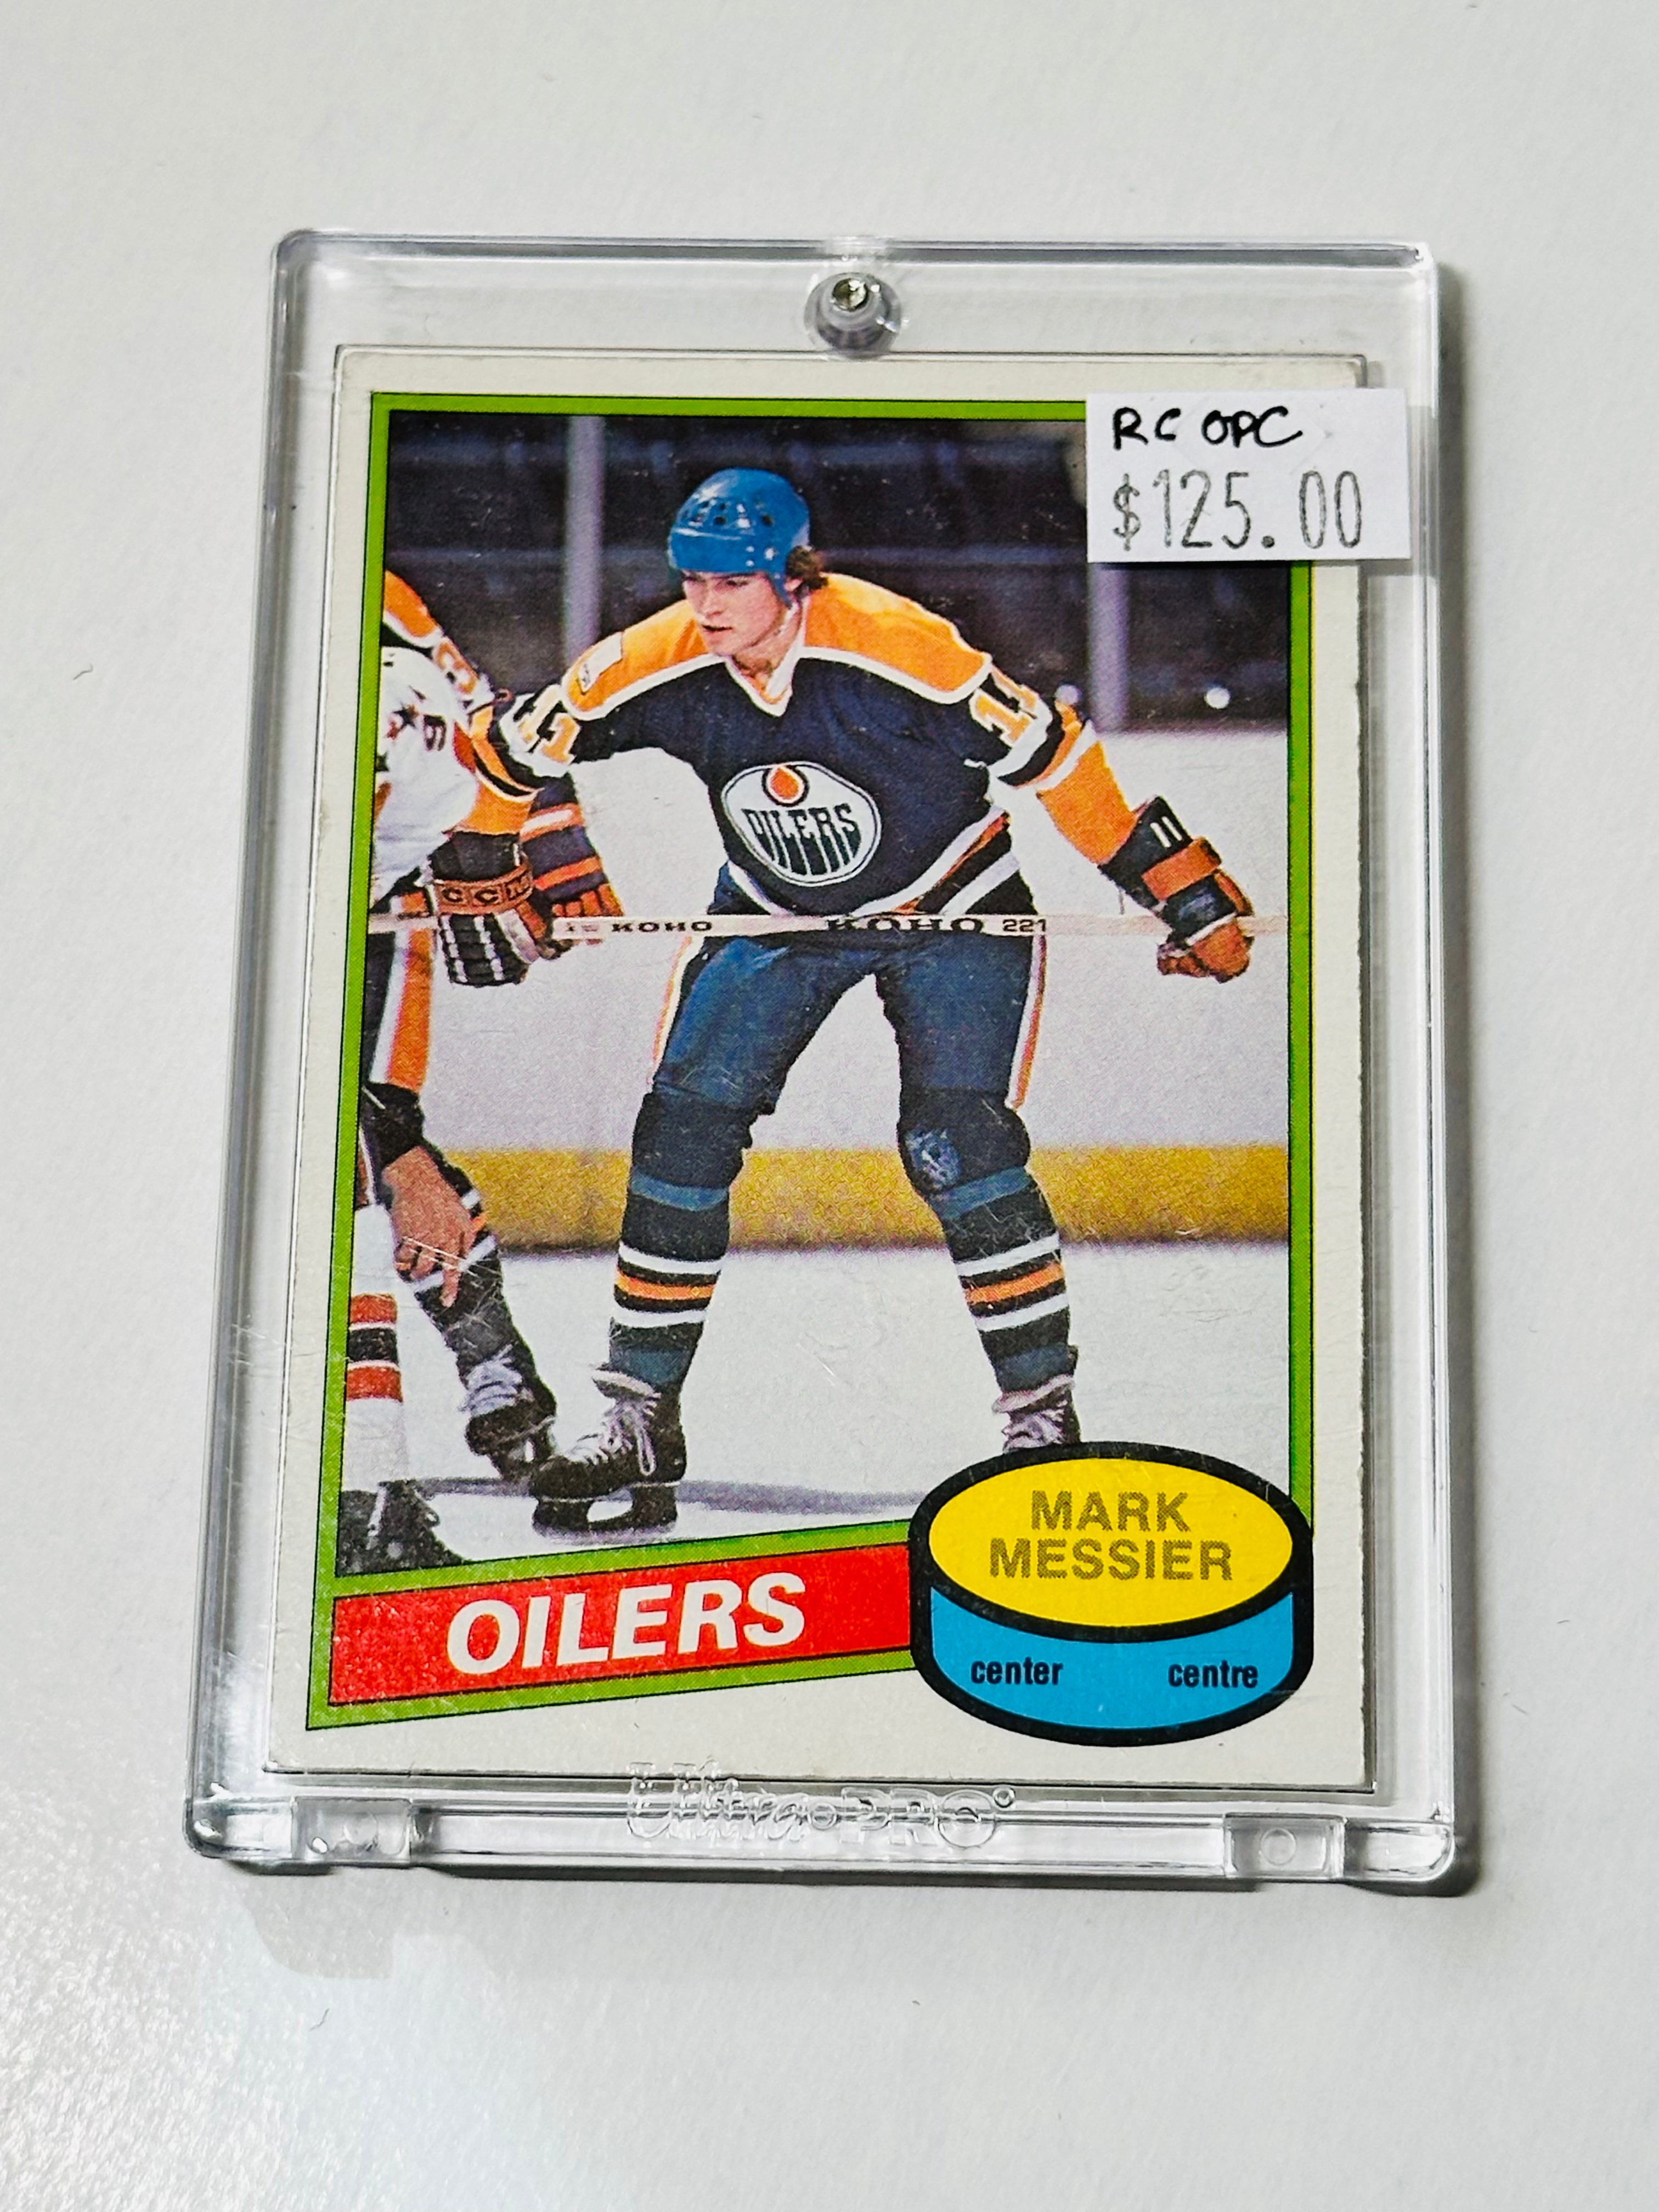 Mark Messier, Hockey legend Opc rookie card 1980-81